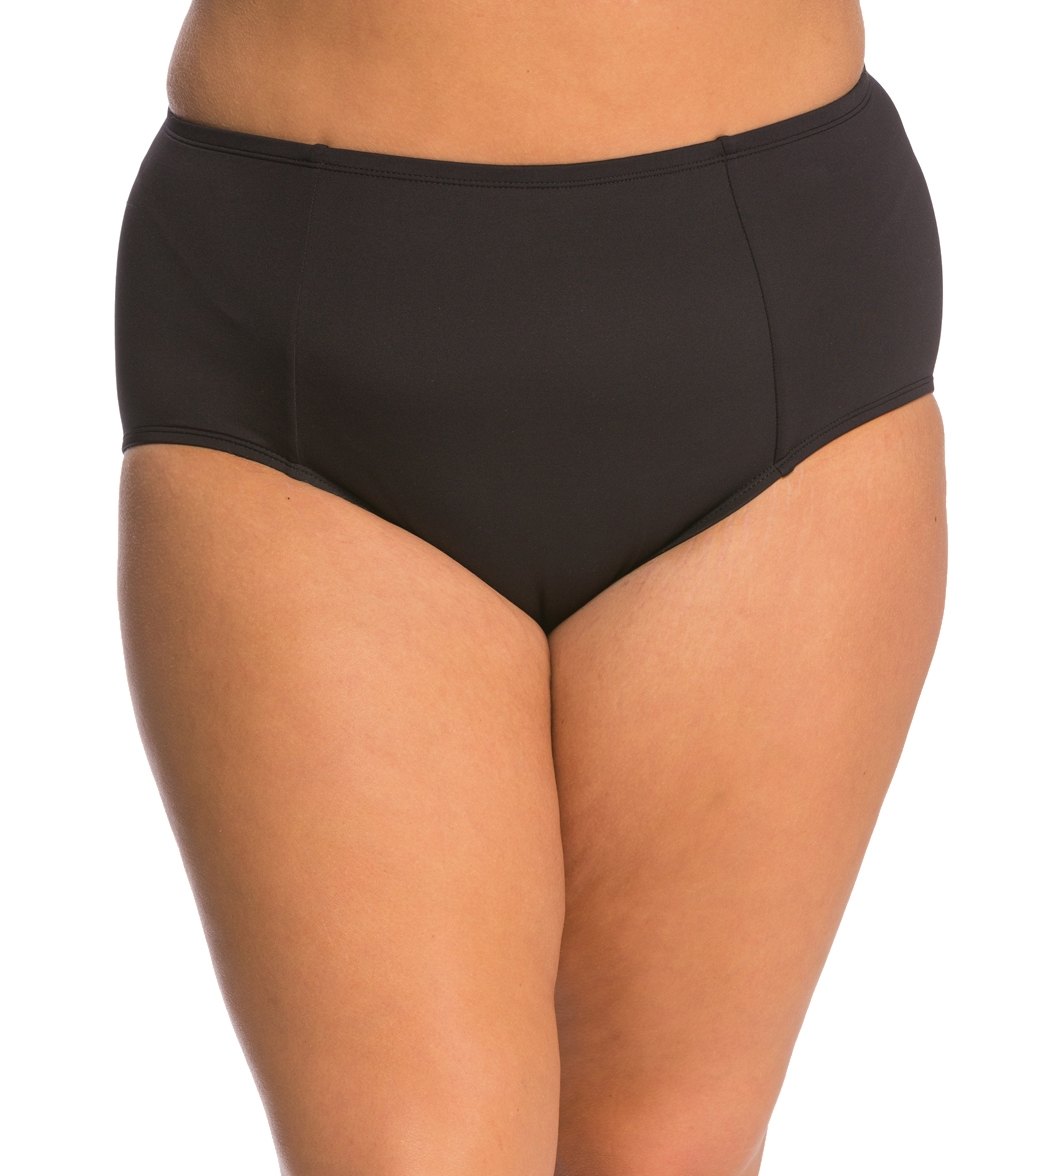 Kenneth Cole Plus Size High Waist Bikini Bottom - Black 3X - Swimoutlet.com